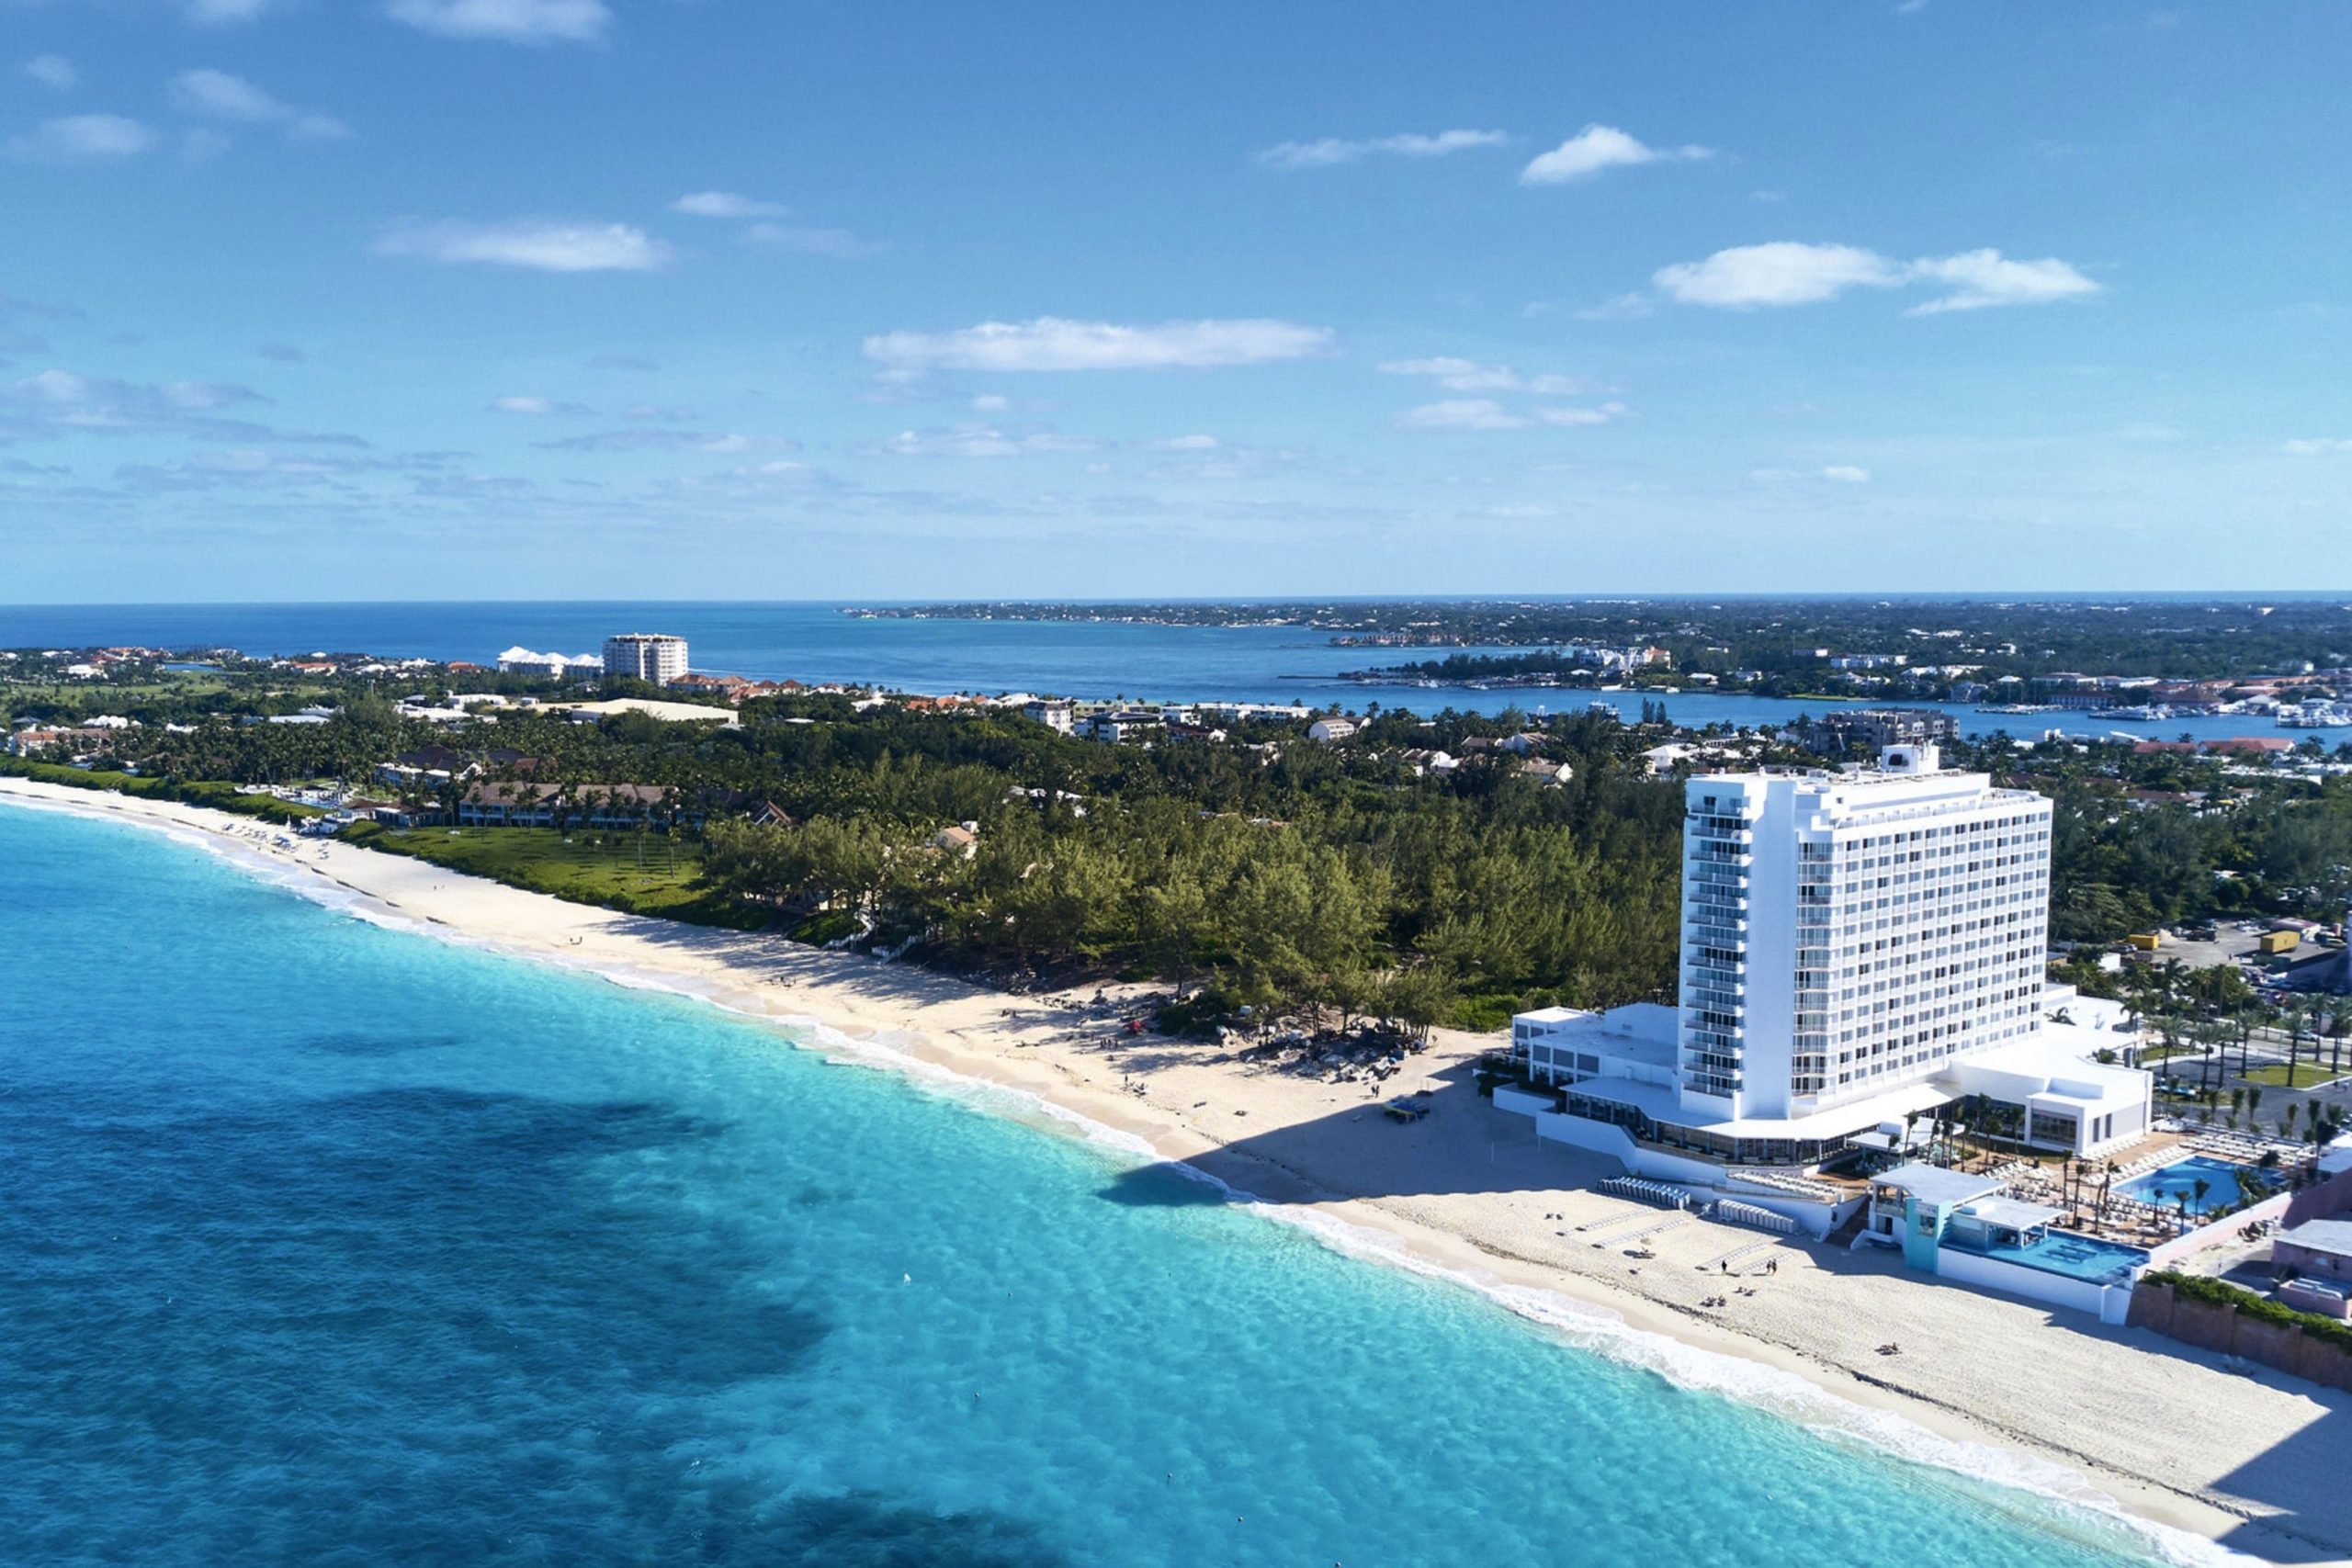 Hotel Riu Palace Paradise Island. Photo Credit: RIU Hotels & Resorts